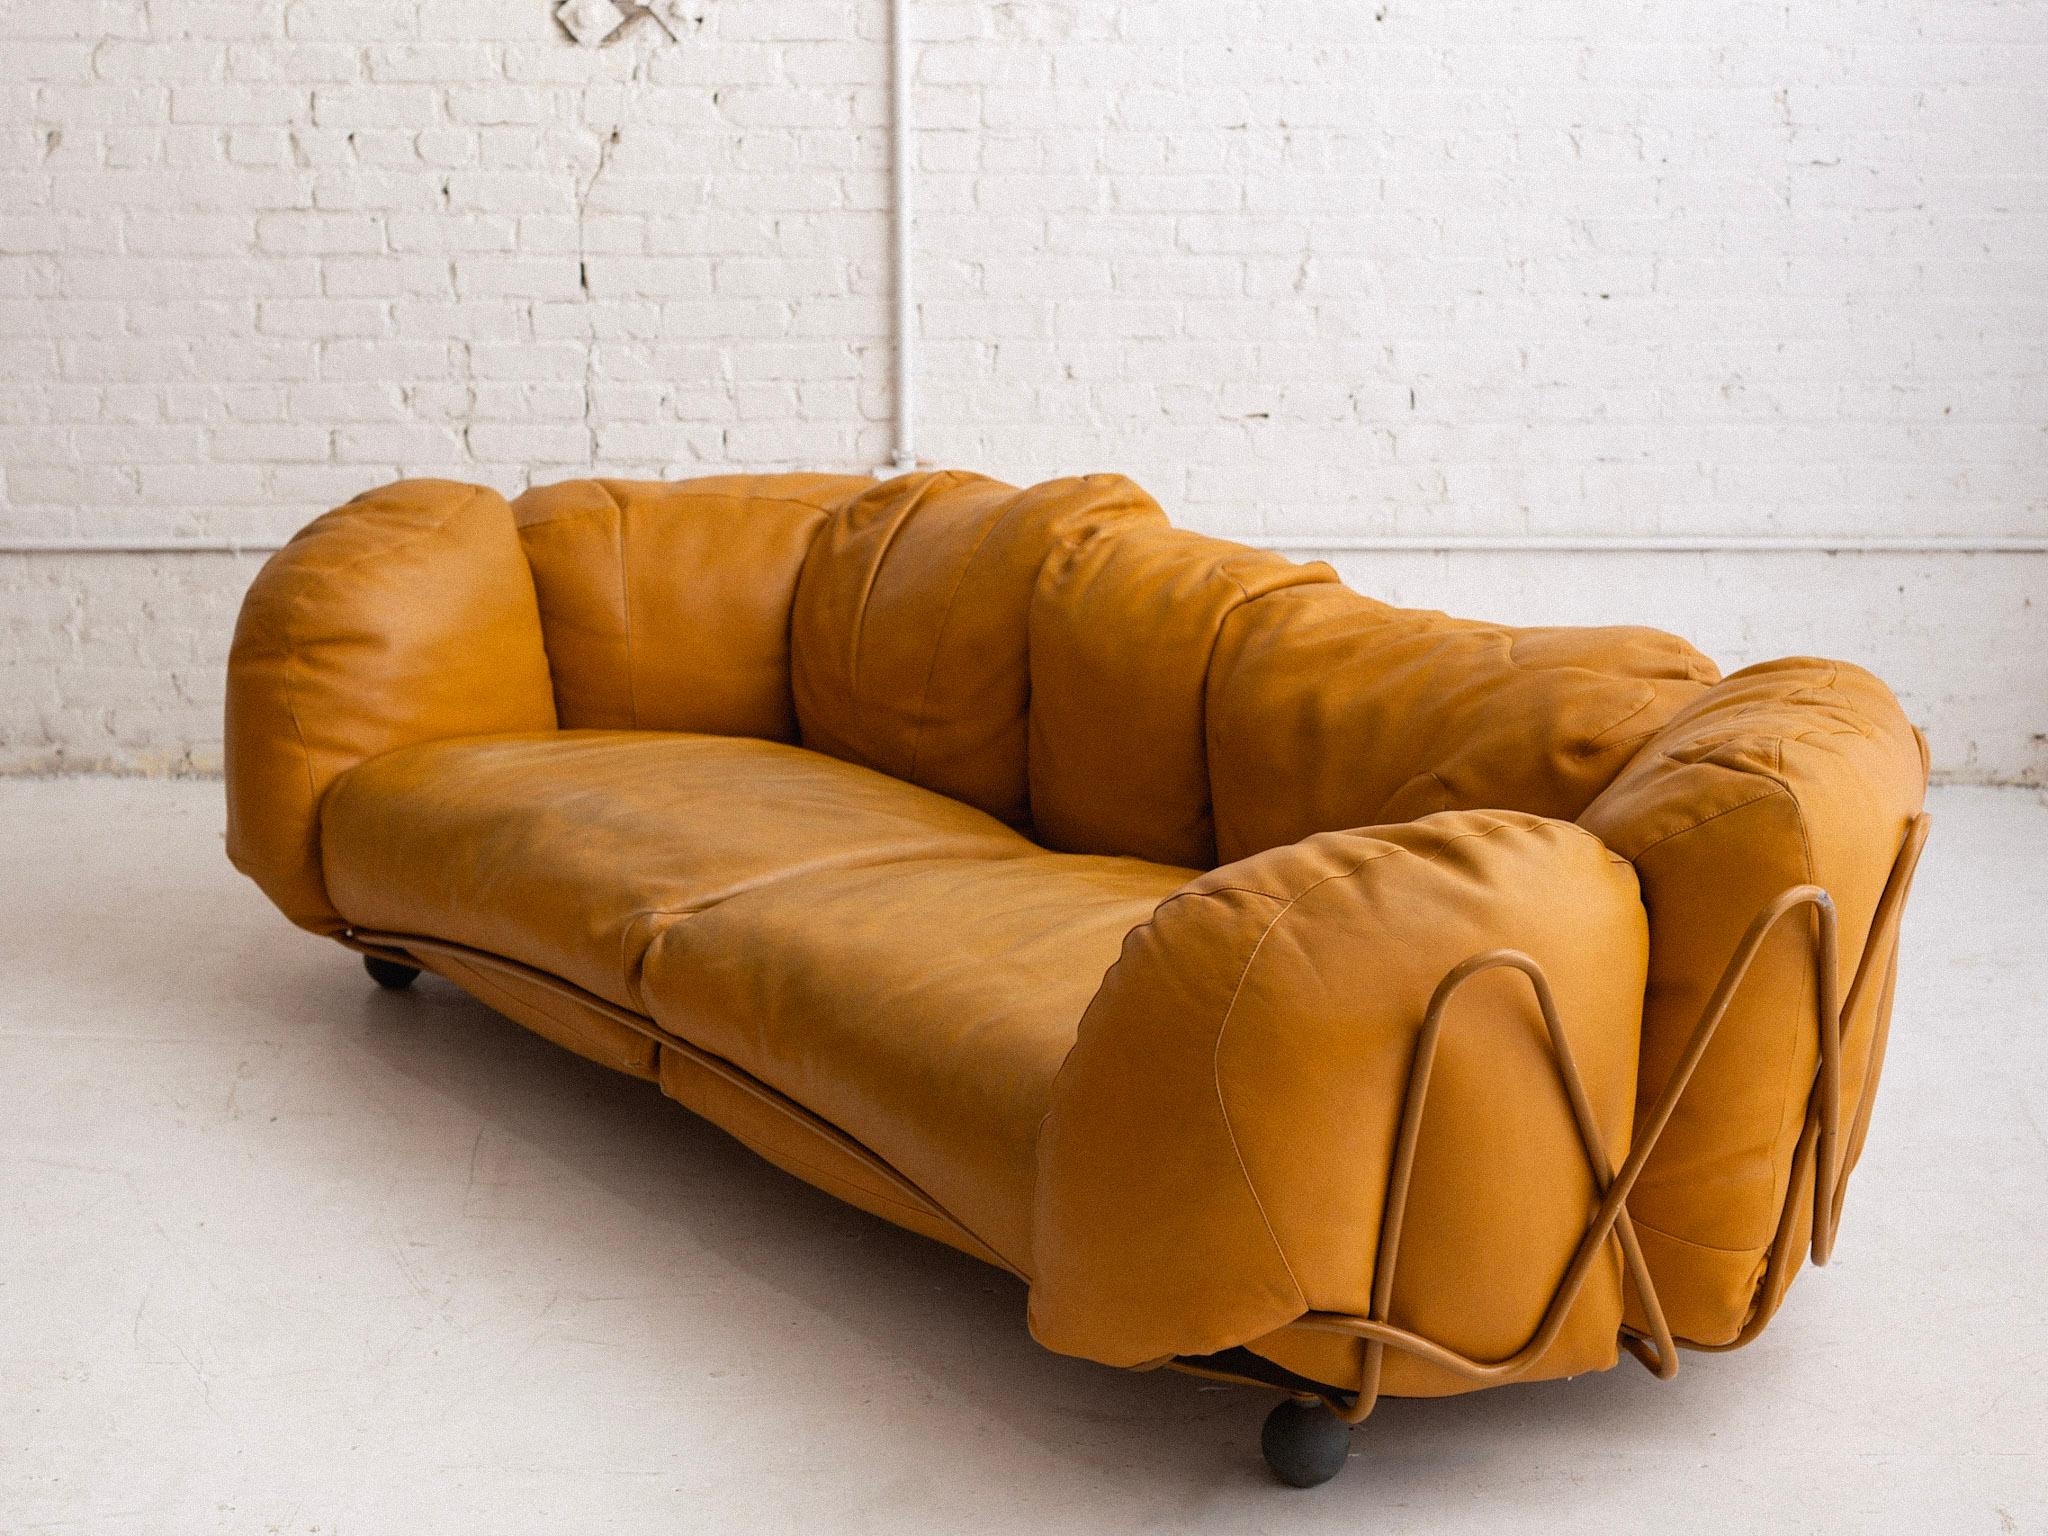 Steel 'Corbeille' Leather Sofa by Francesco Binfare for Edra